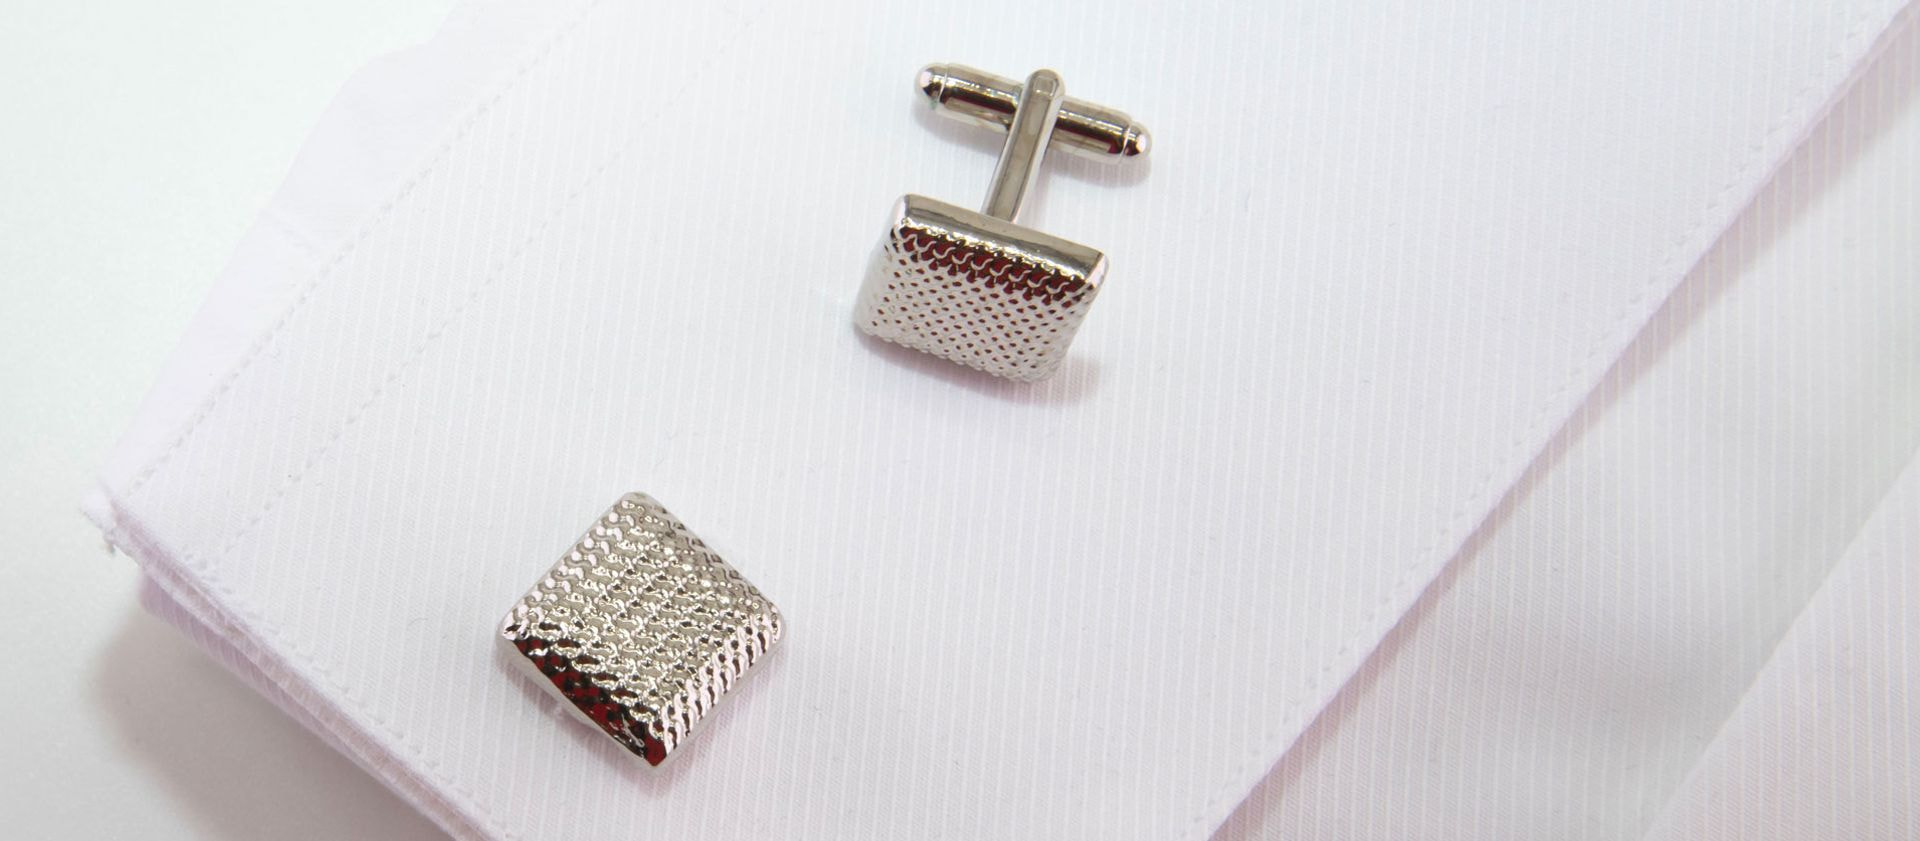 Square silver-colored cufflinks